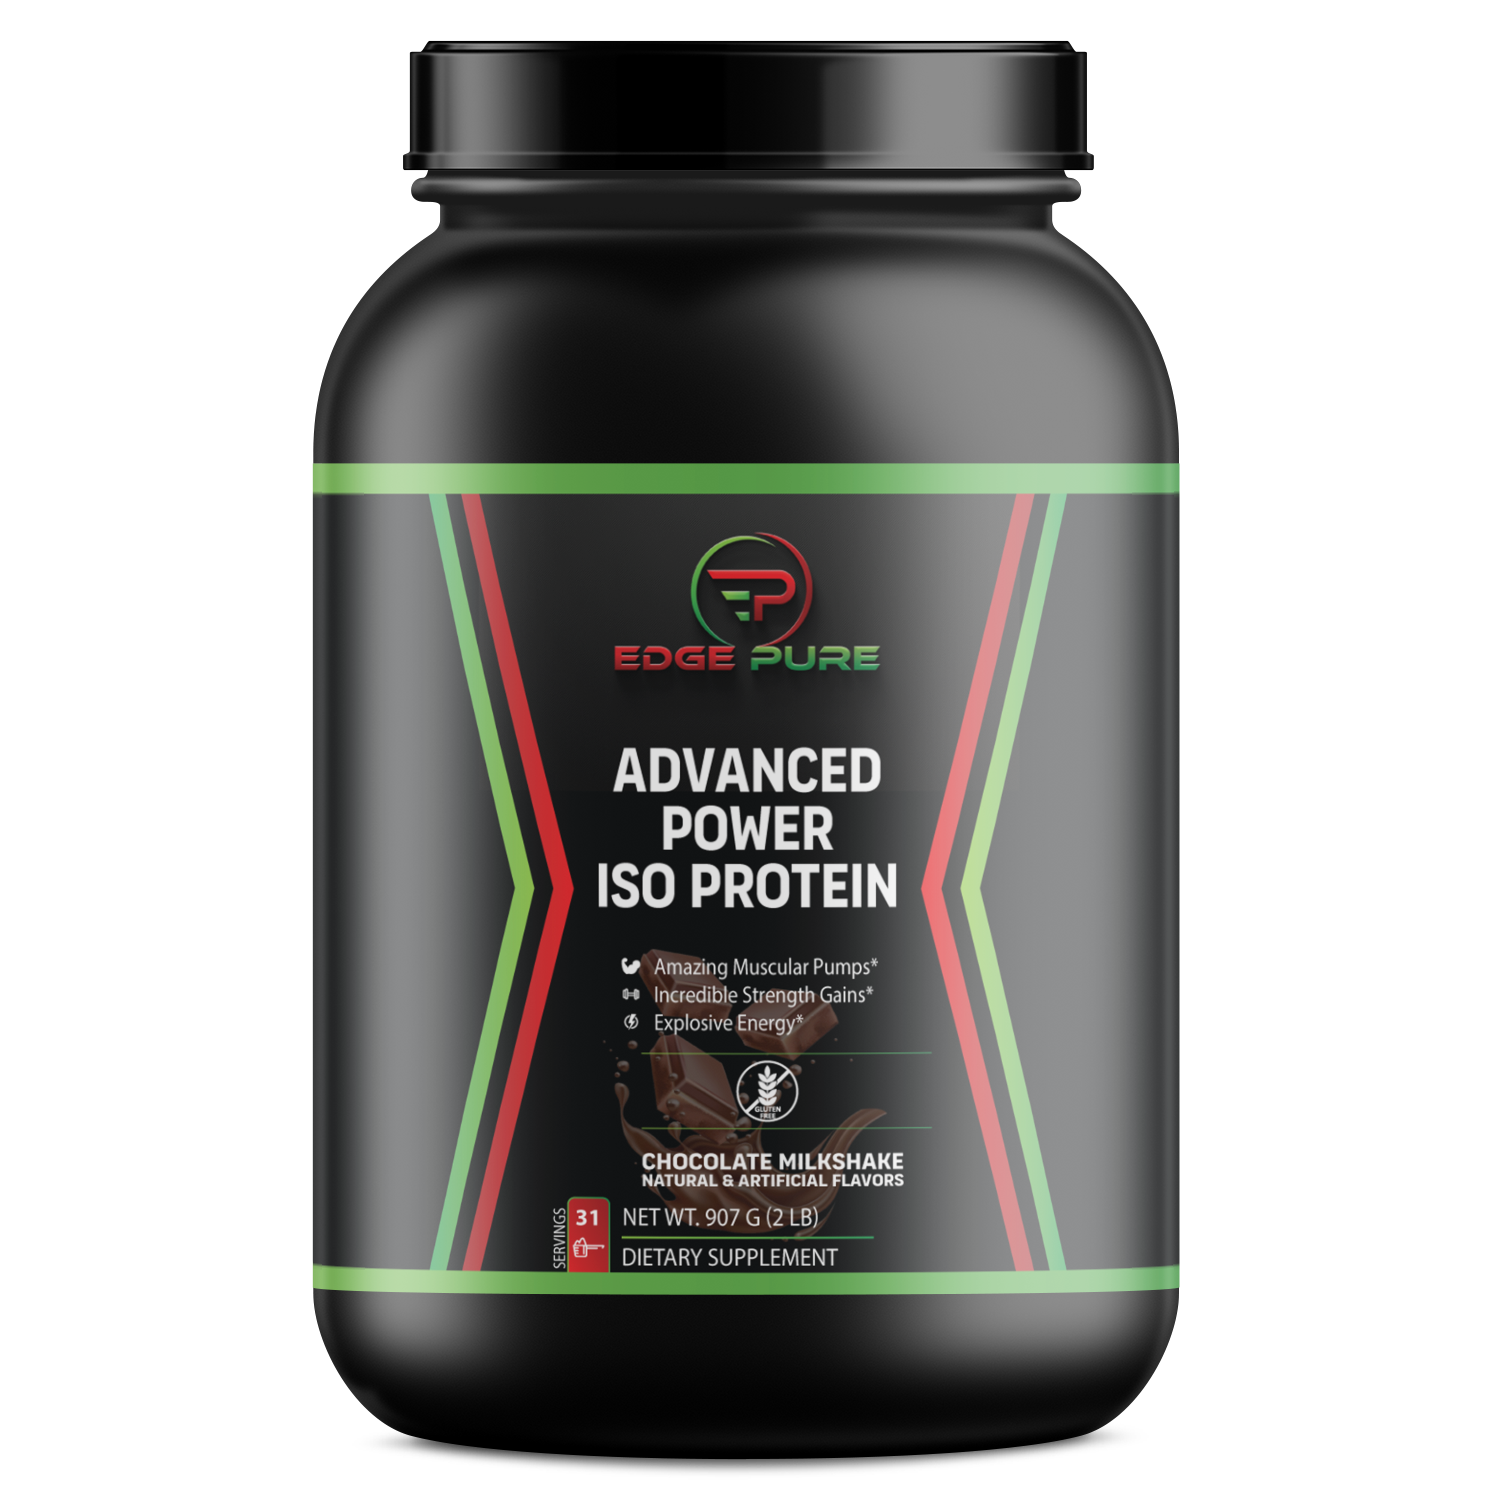 Advanced Power ISO Protein - Chocolate Milkshake (2lb) Edge Pure